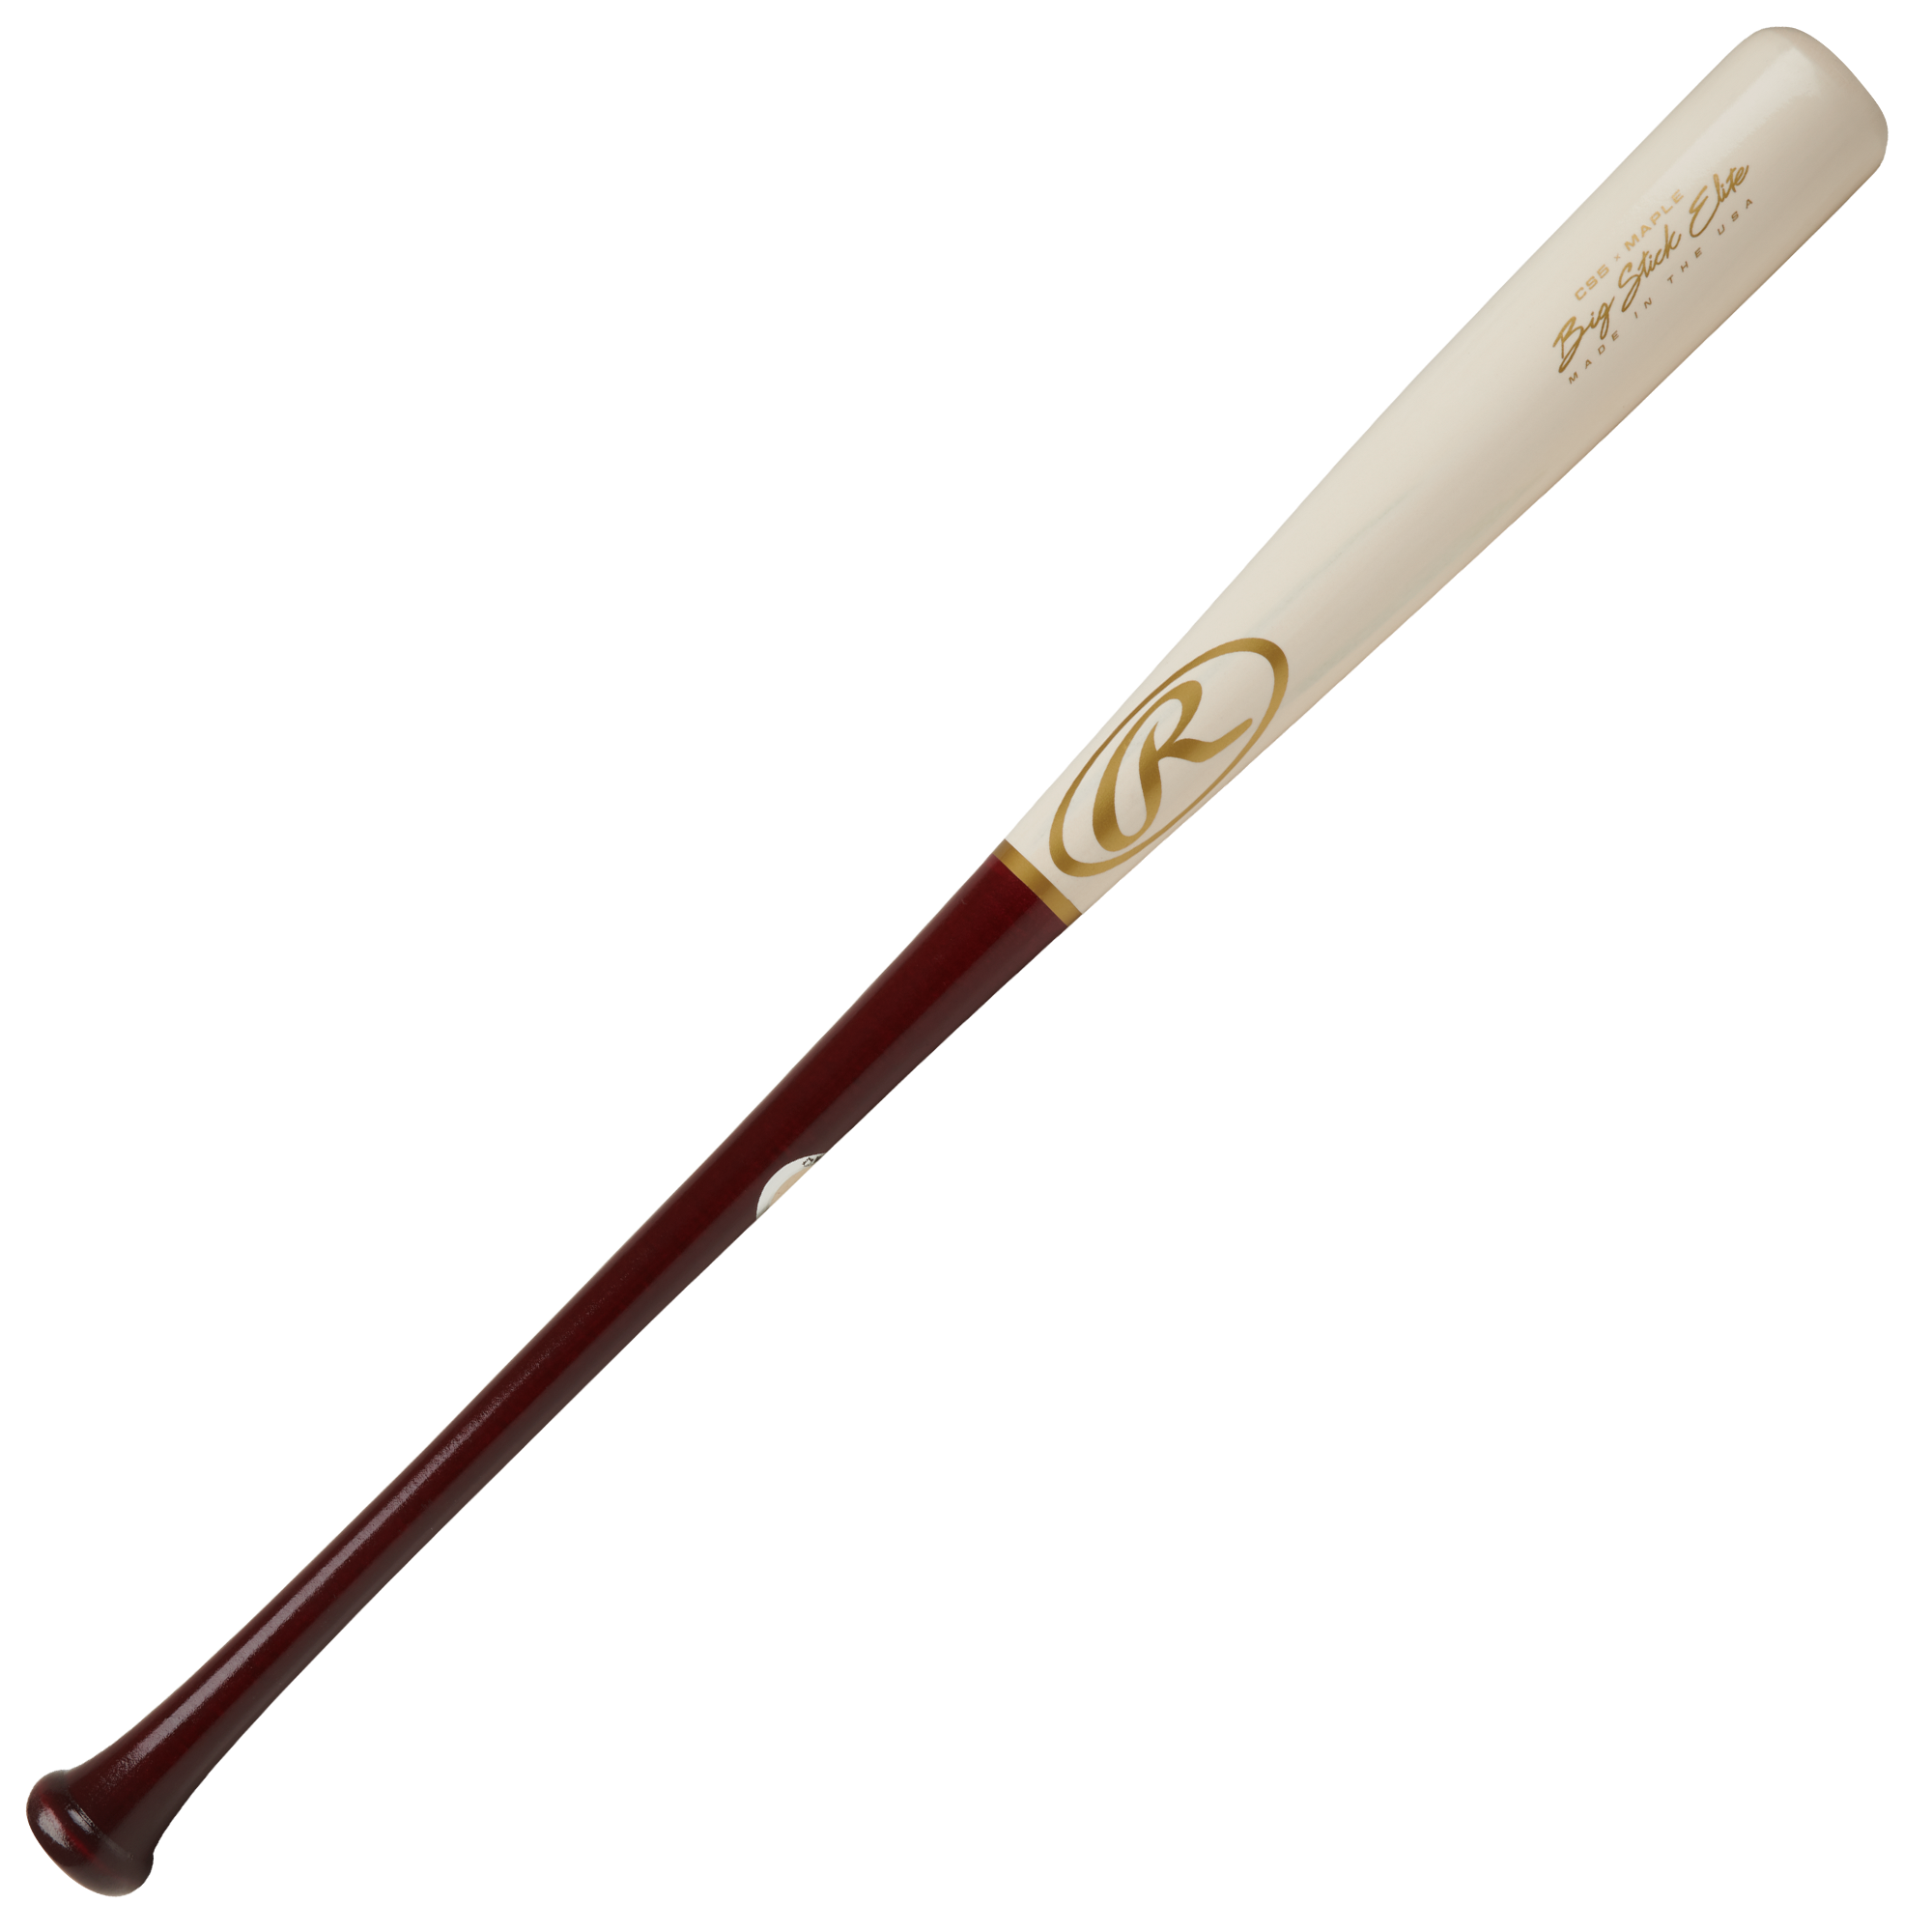 Senior Big Stick Elite I13 Birch Wood Baseball Bat from Rawlings